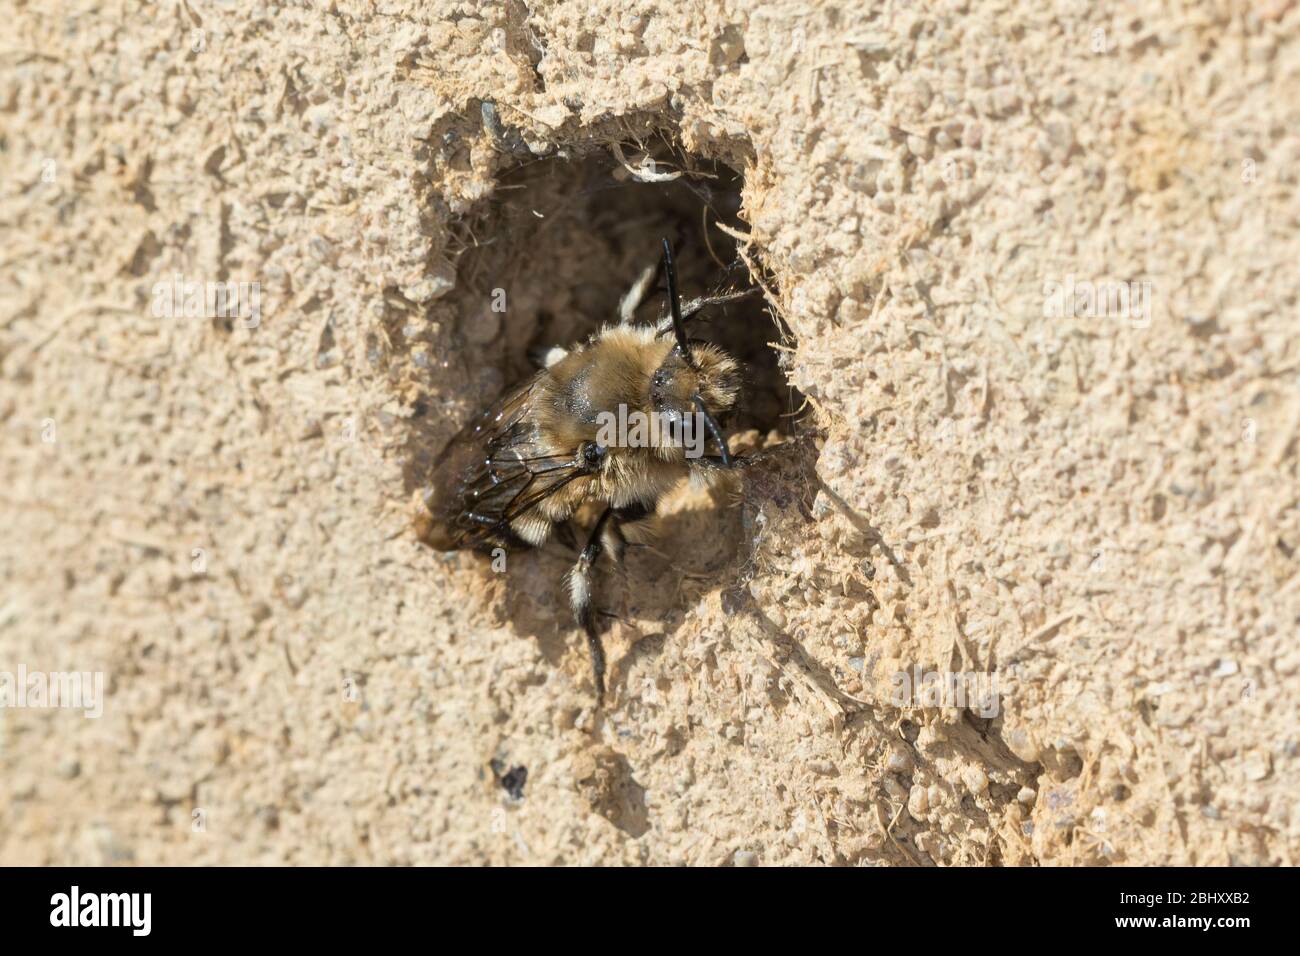 Trauerbiene, Gemeine Trauerbiene, Trauer-Biene, Weibchen an einer Lehmwand am Nistloch einer Pelzbiene (Anthophora plugipes), Melecta albifrons, Melec Banque D'Images